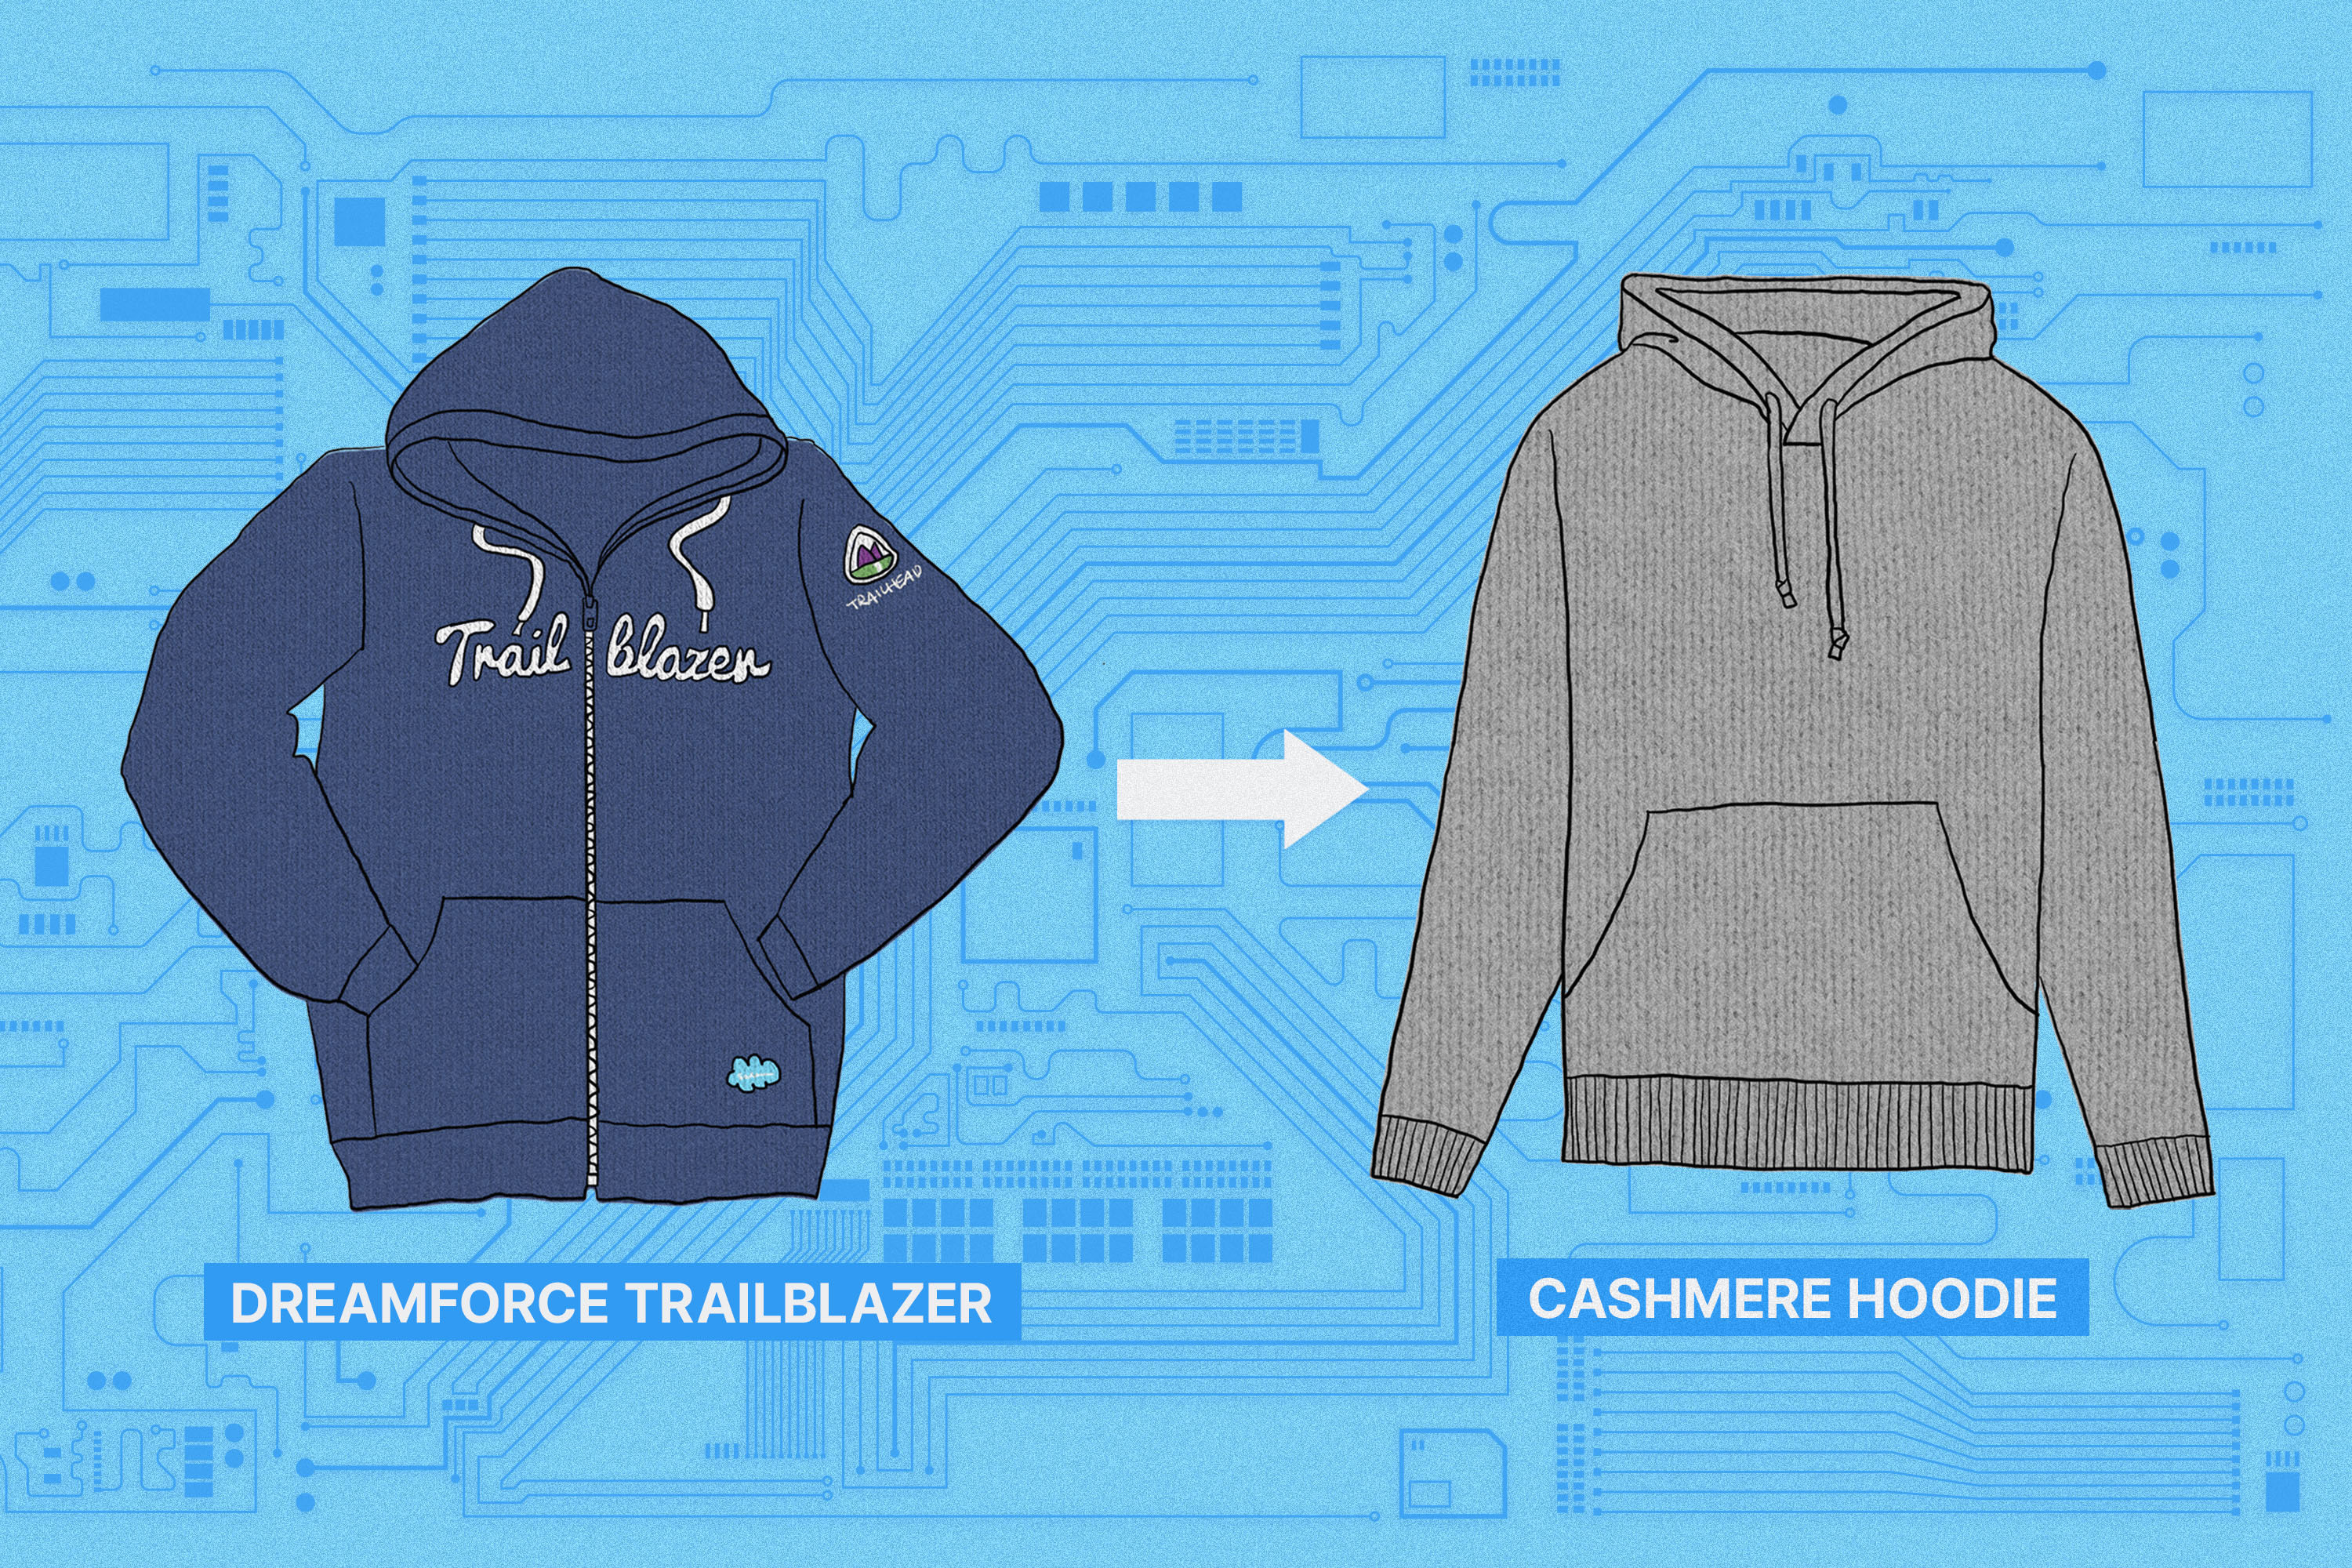 A comparison of a Dreamforce Trailblazer vest and Cashmere hoodie.